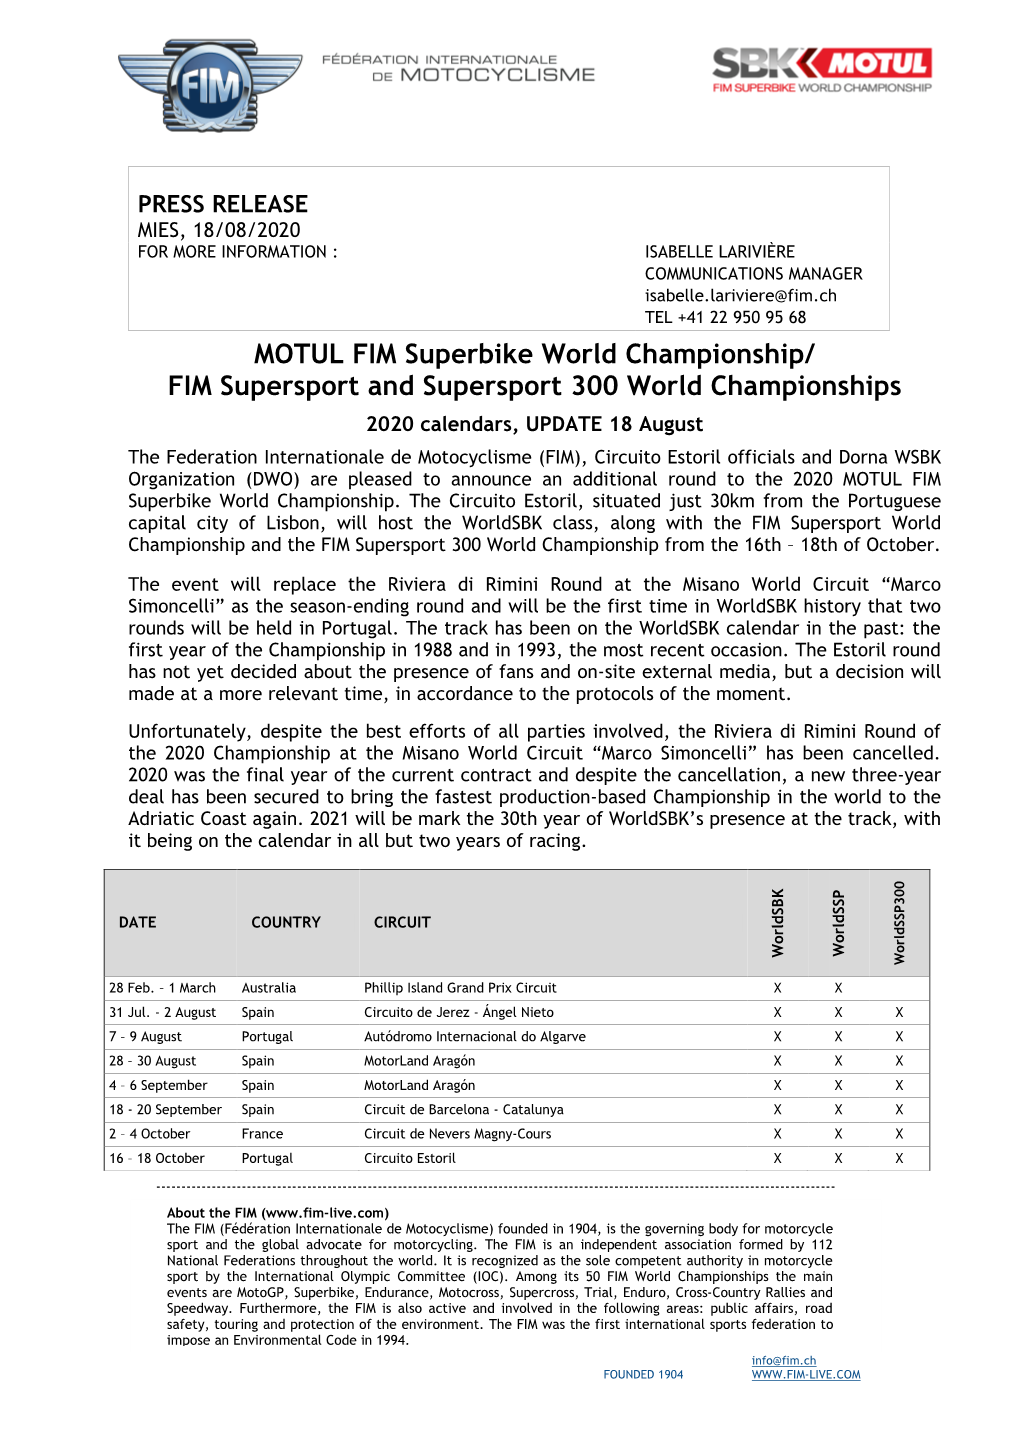 MOTUL FIM Superbike World Championship